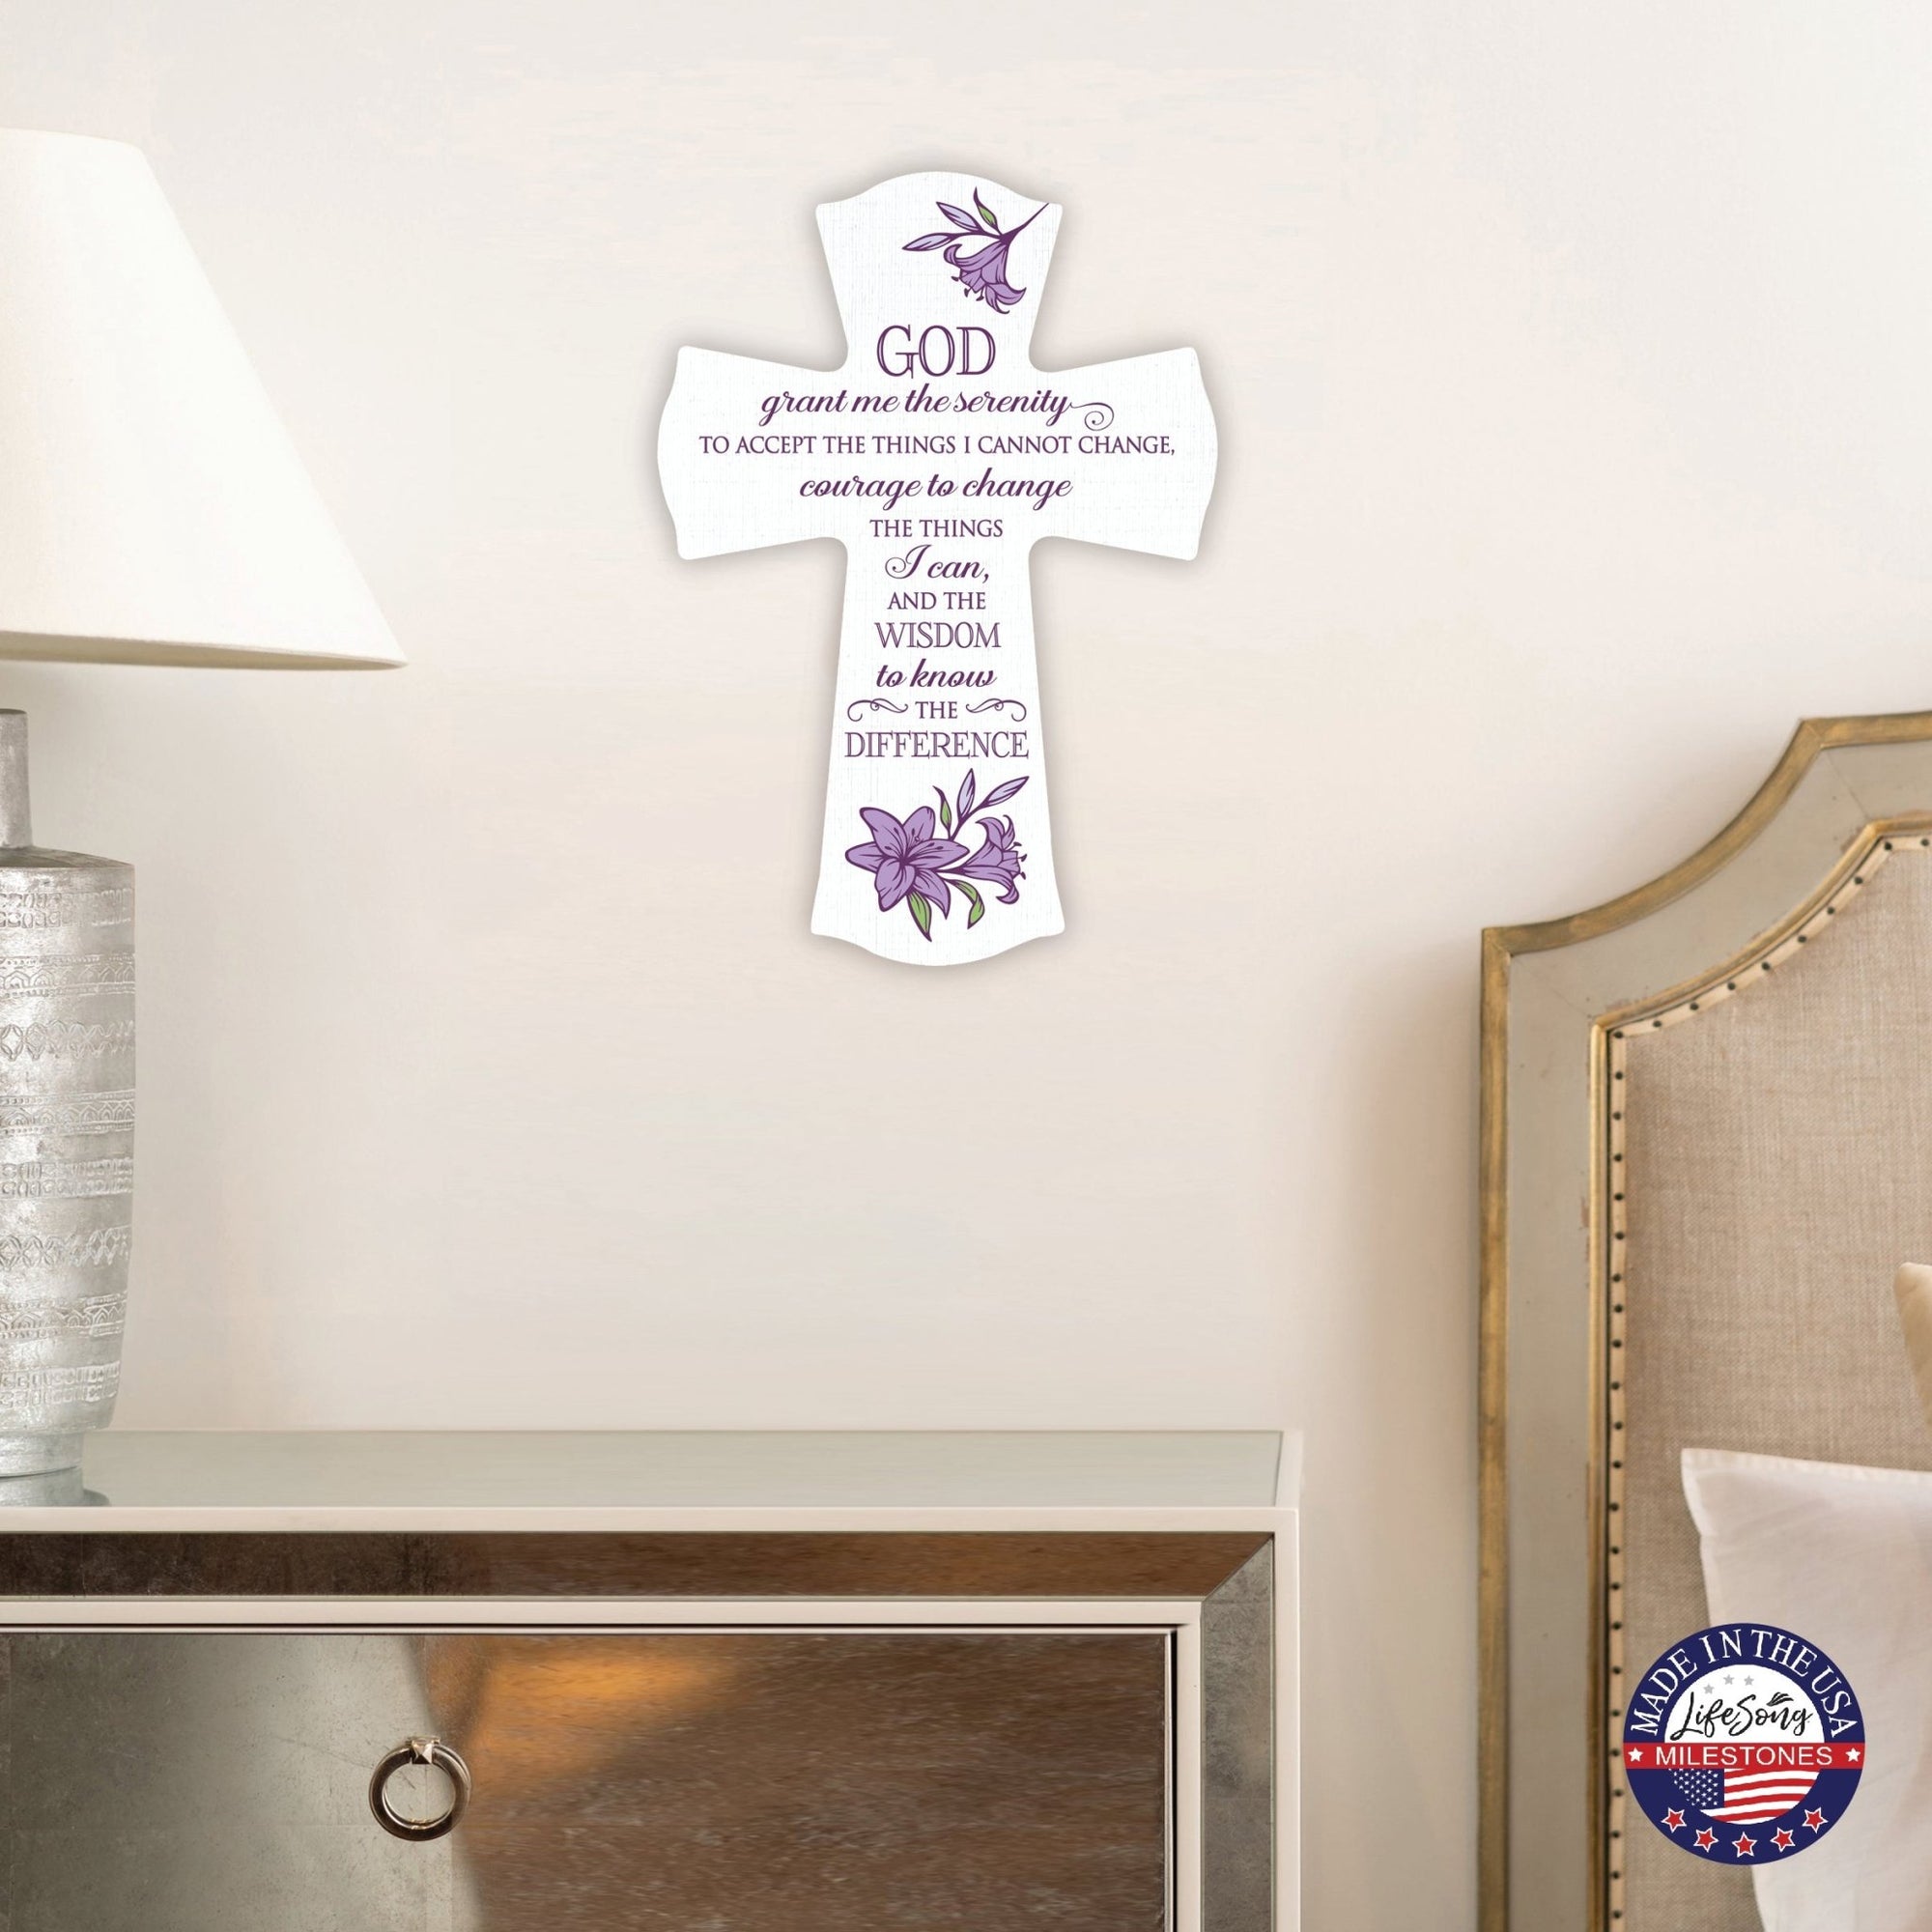 Inspirational Hanging Wooden Prayer Wall Cross Home Decor - LifeSong Milestones